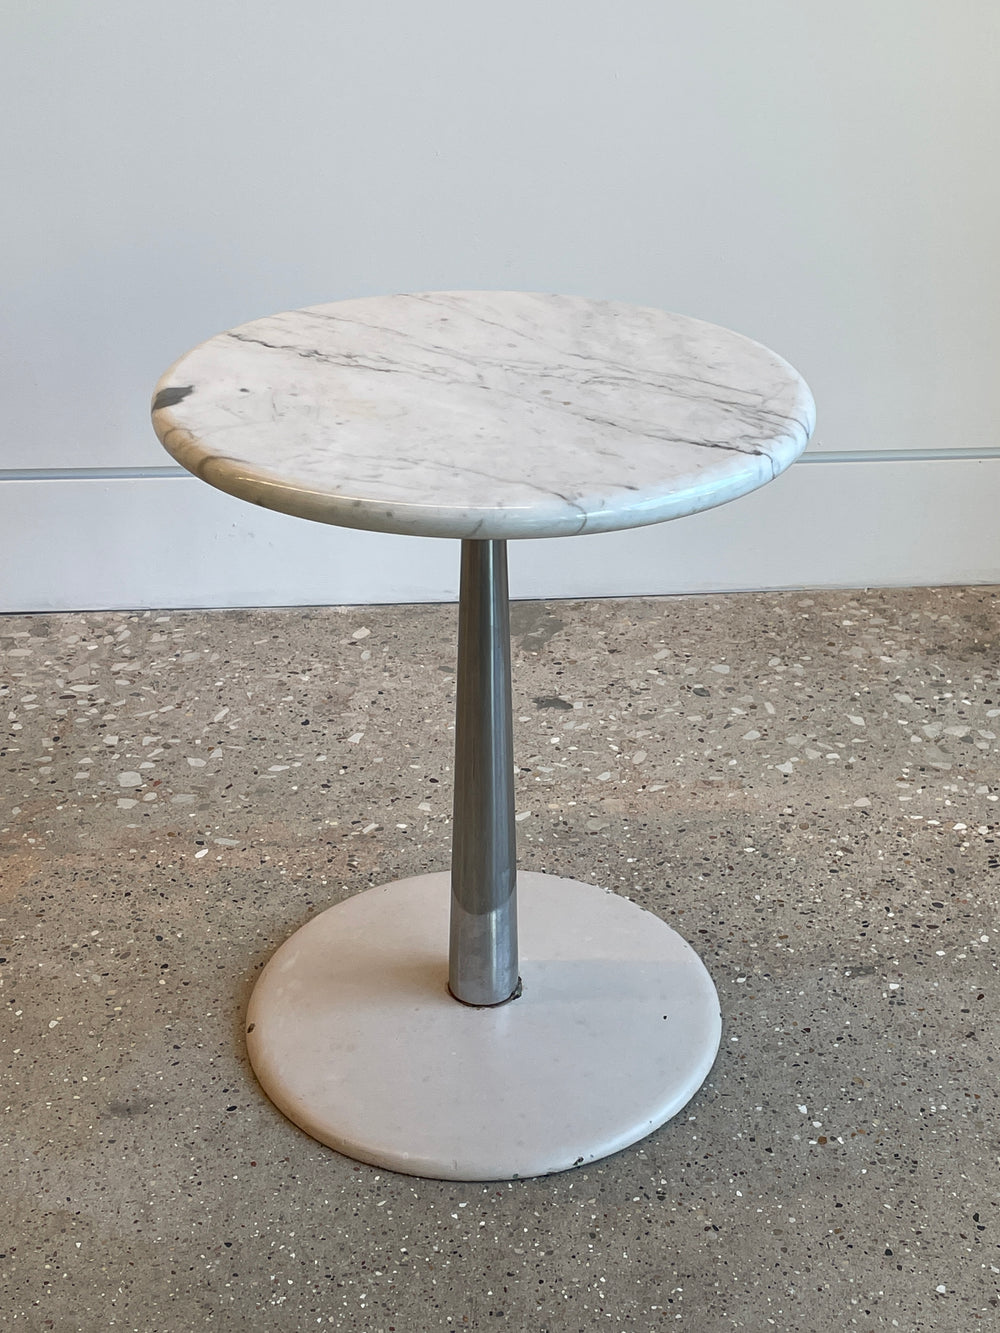 Erwine & Estelle Laverne marble-top stem side table model ST-8, USA, 1960s